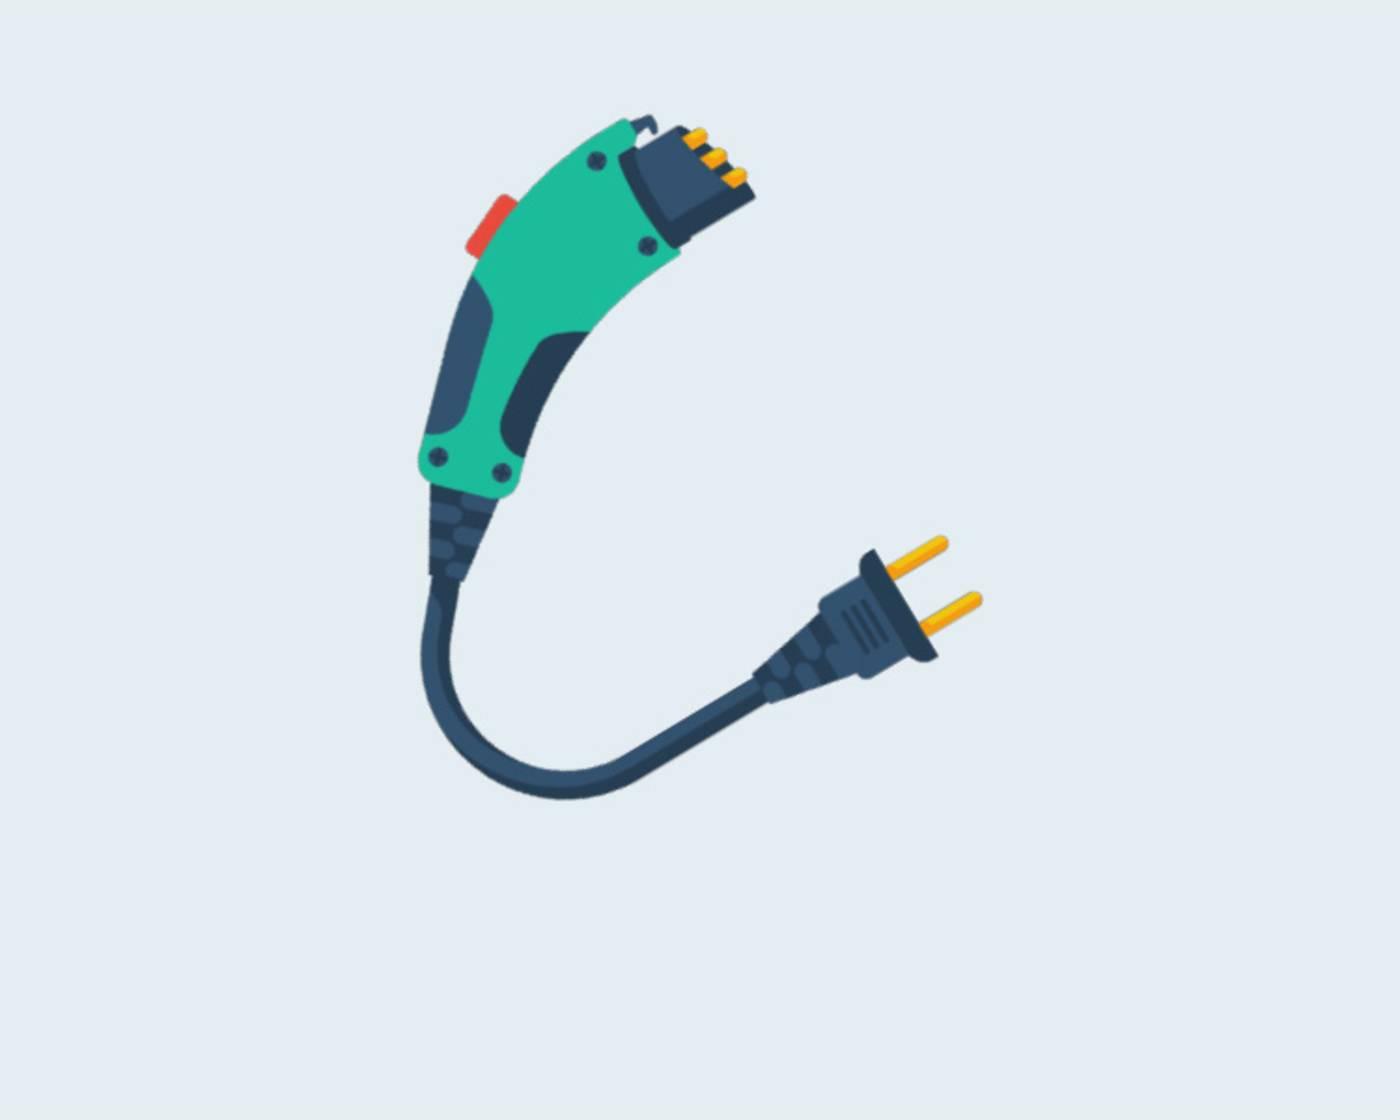 Electric charging plug illustration